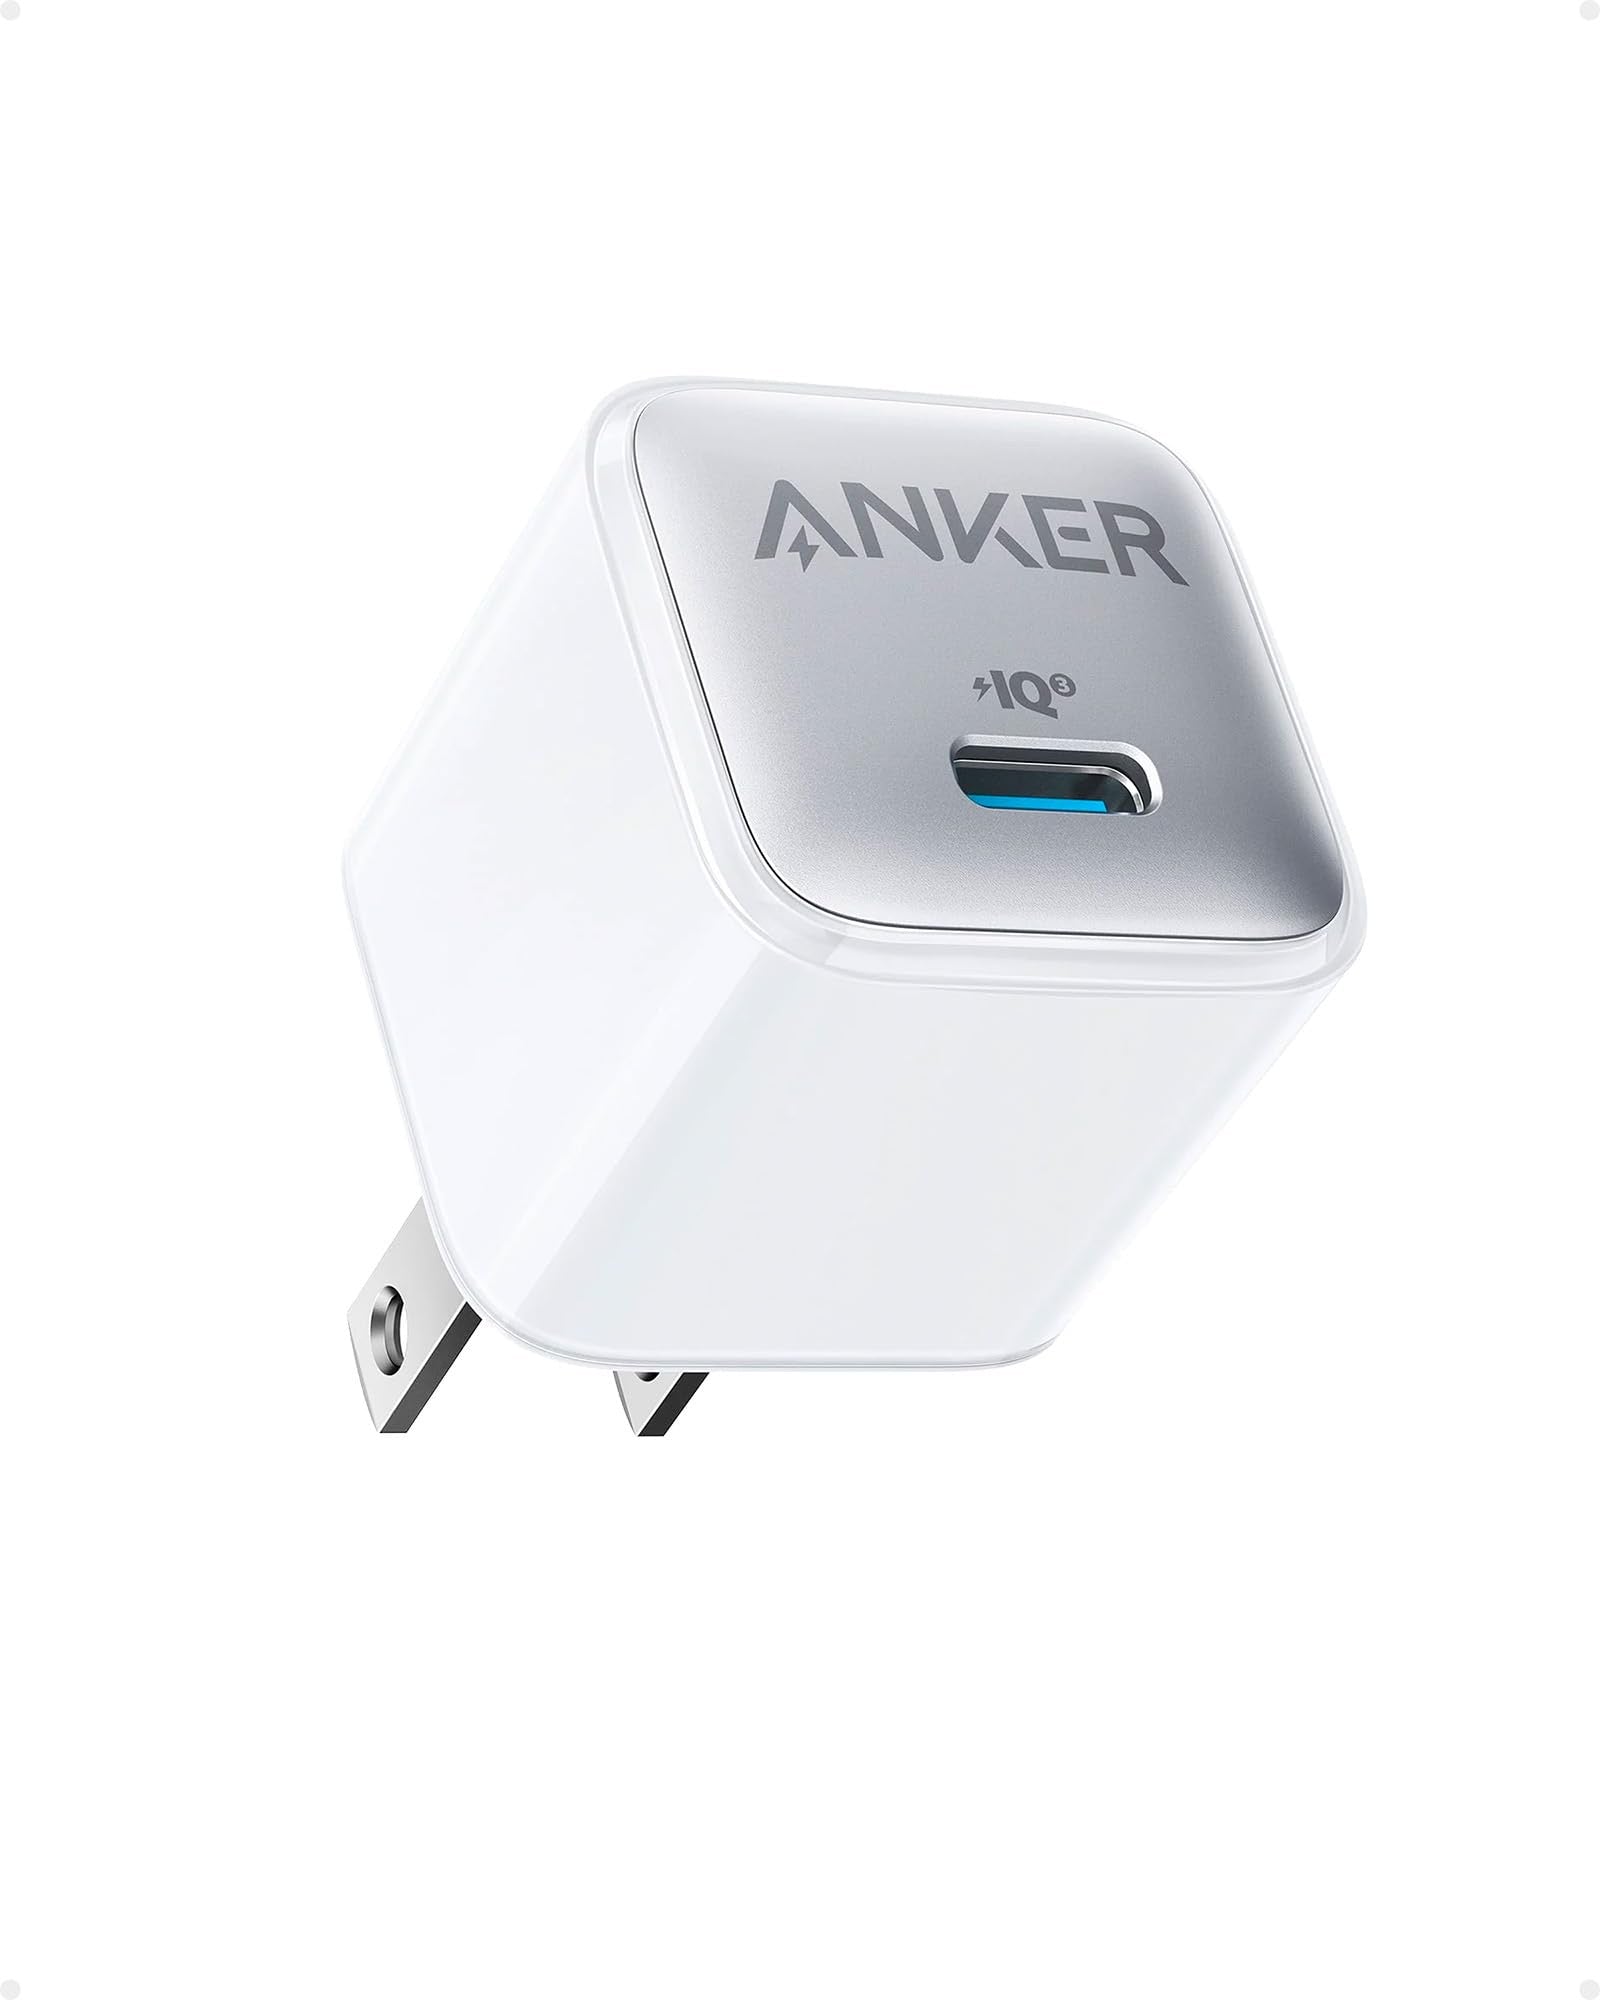 Anker 511 usb-c charger (Nano 3 ,30w)